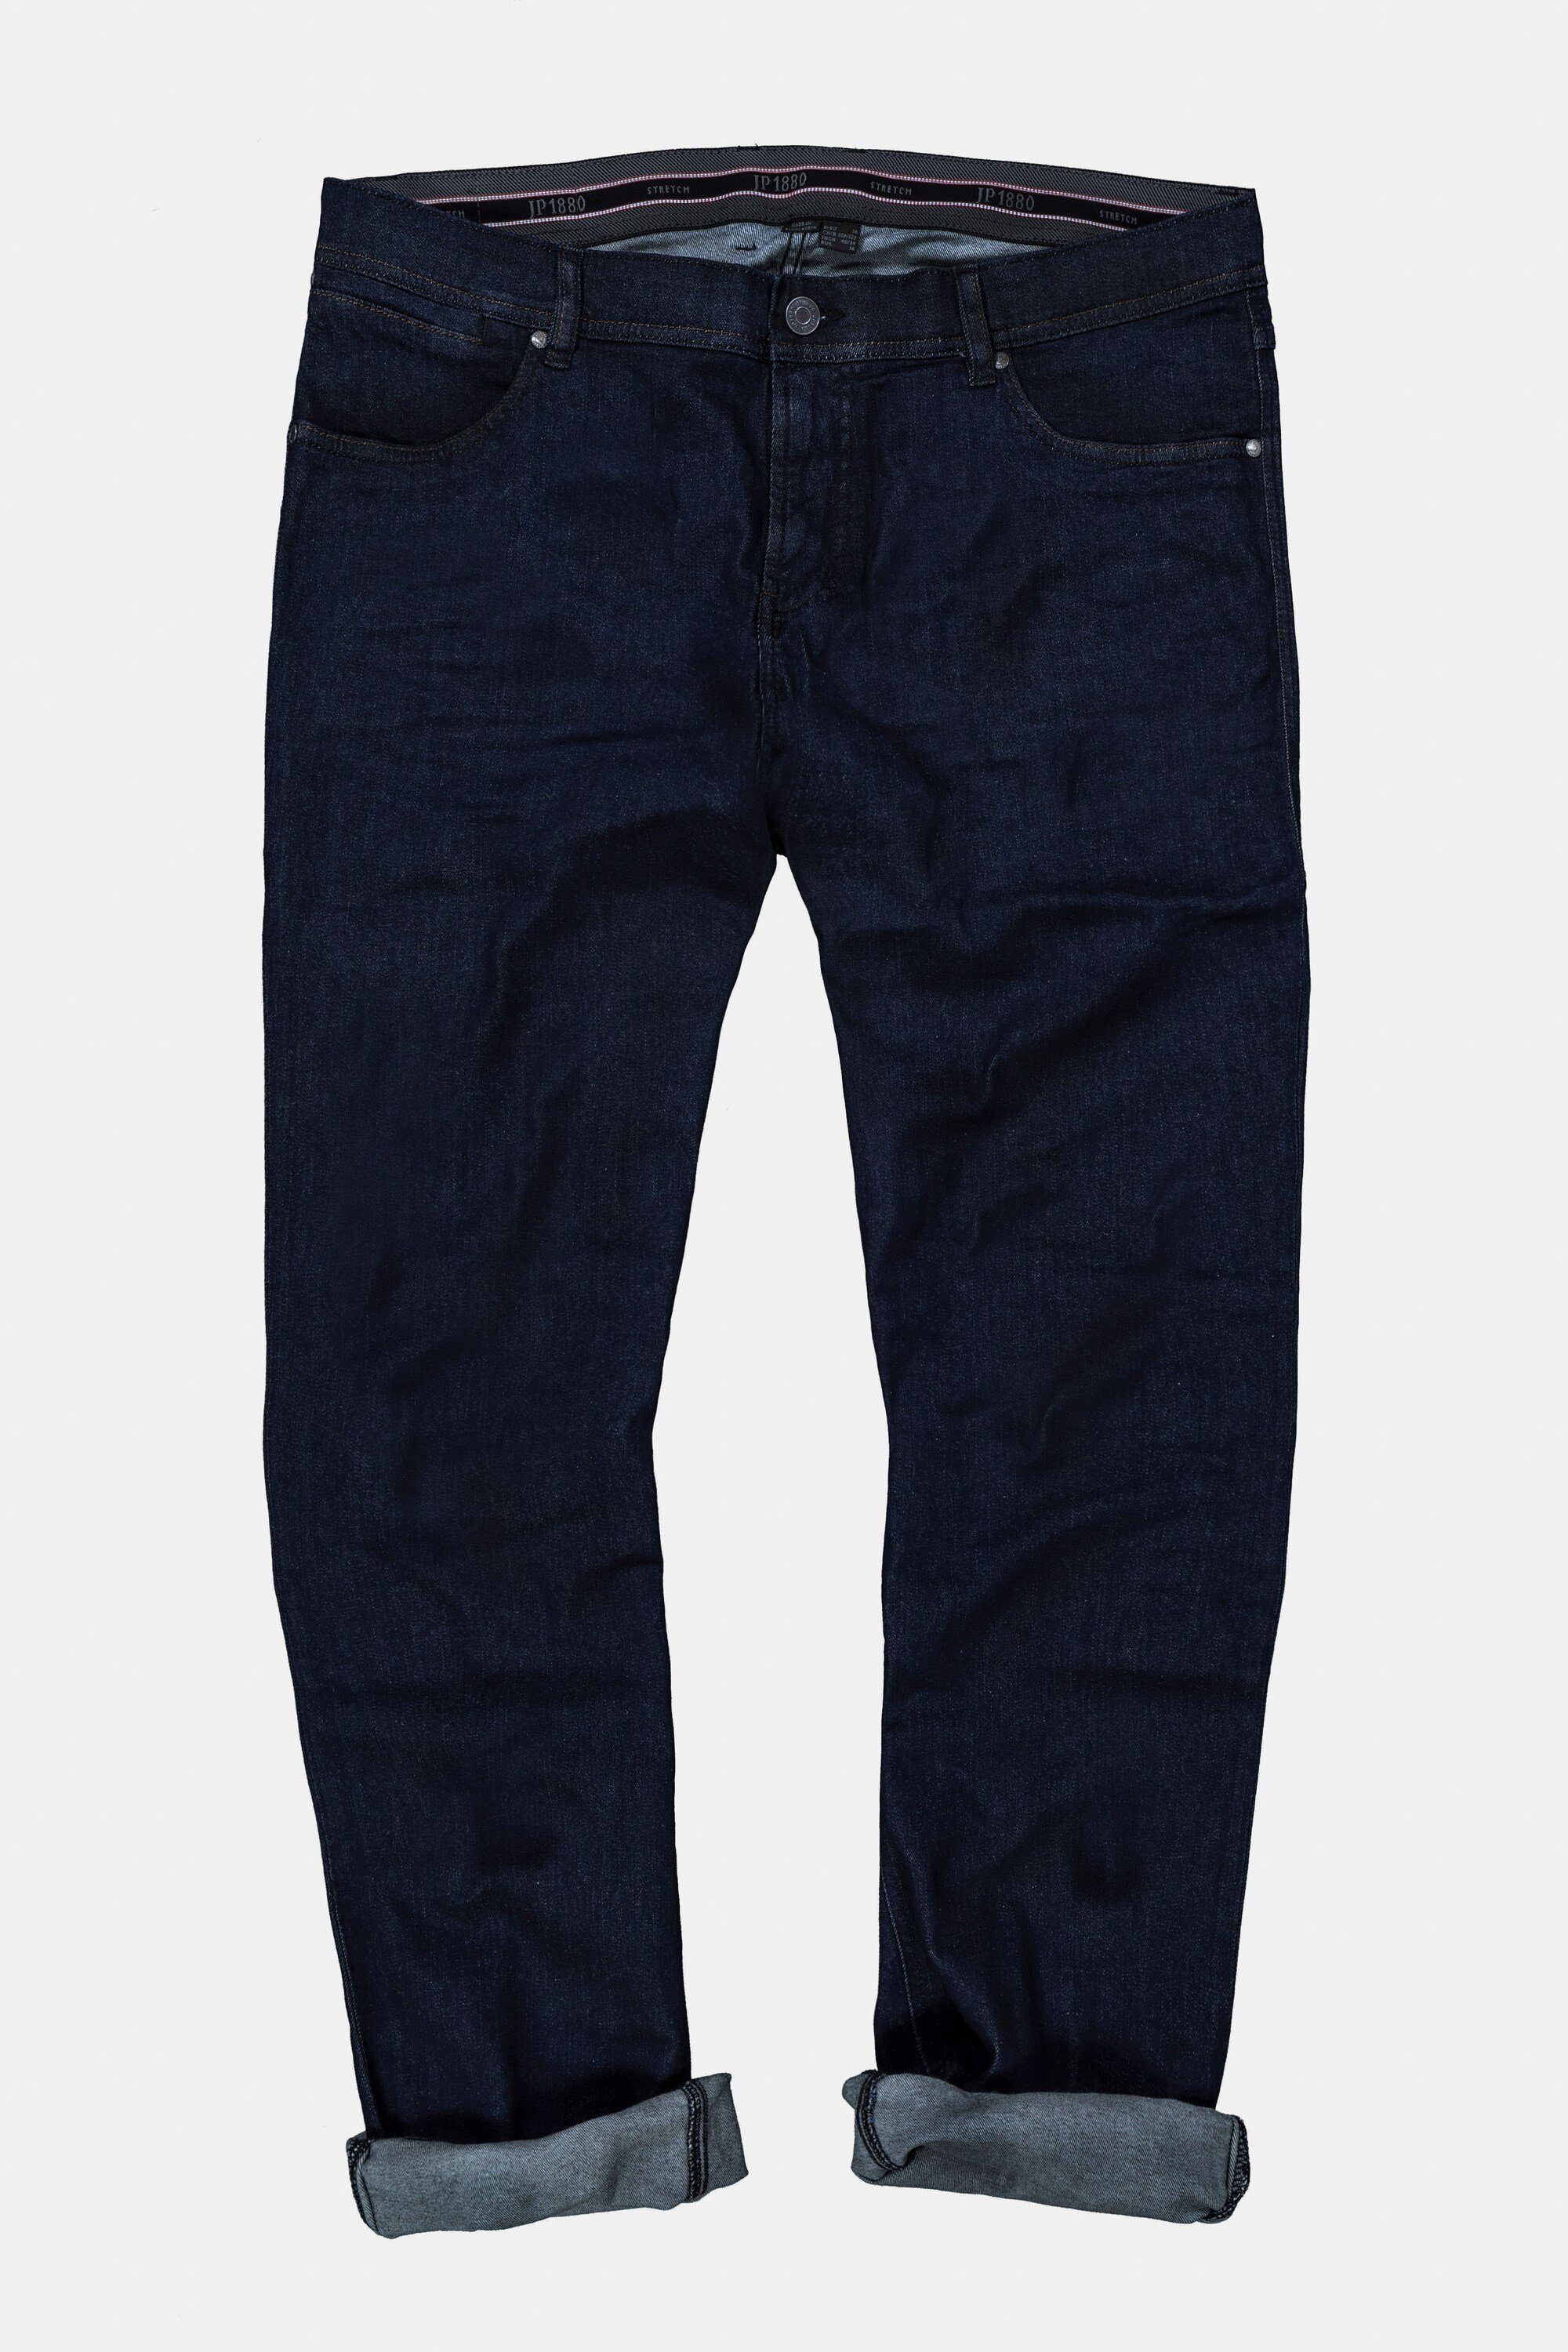 bis 70/35 Bauchfit Gr. dark Denim Jeans denim Cargohose blue JP1880